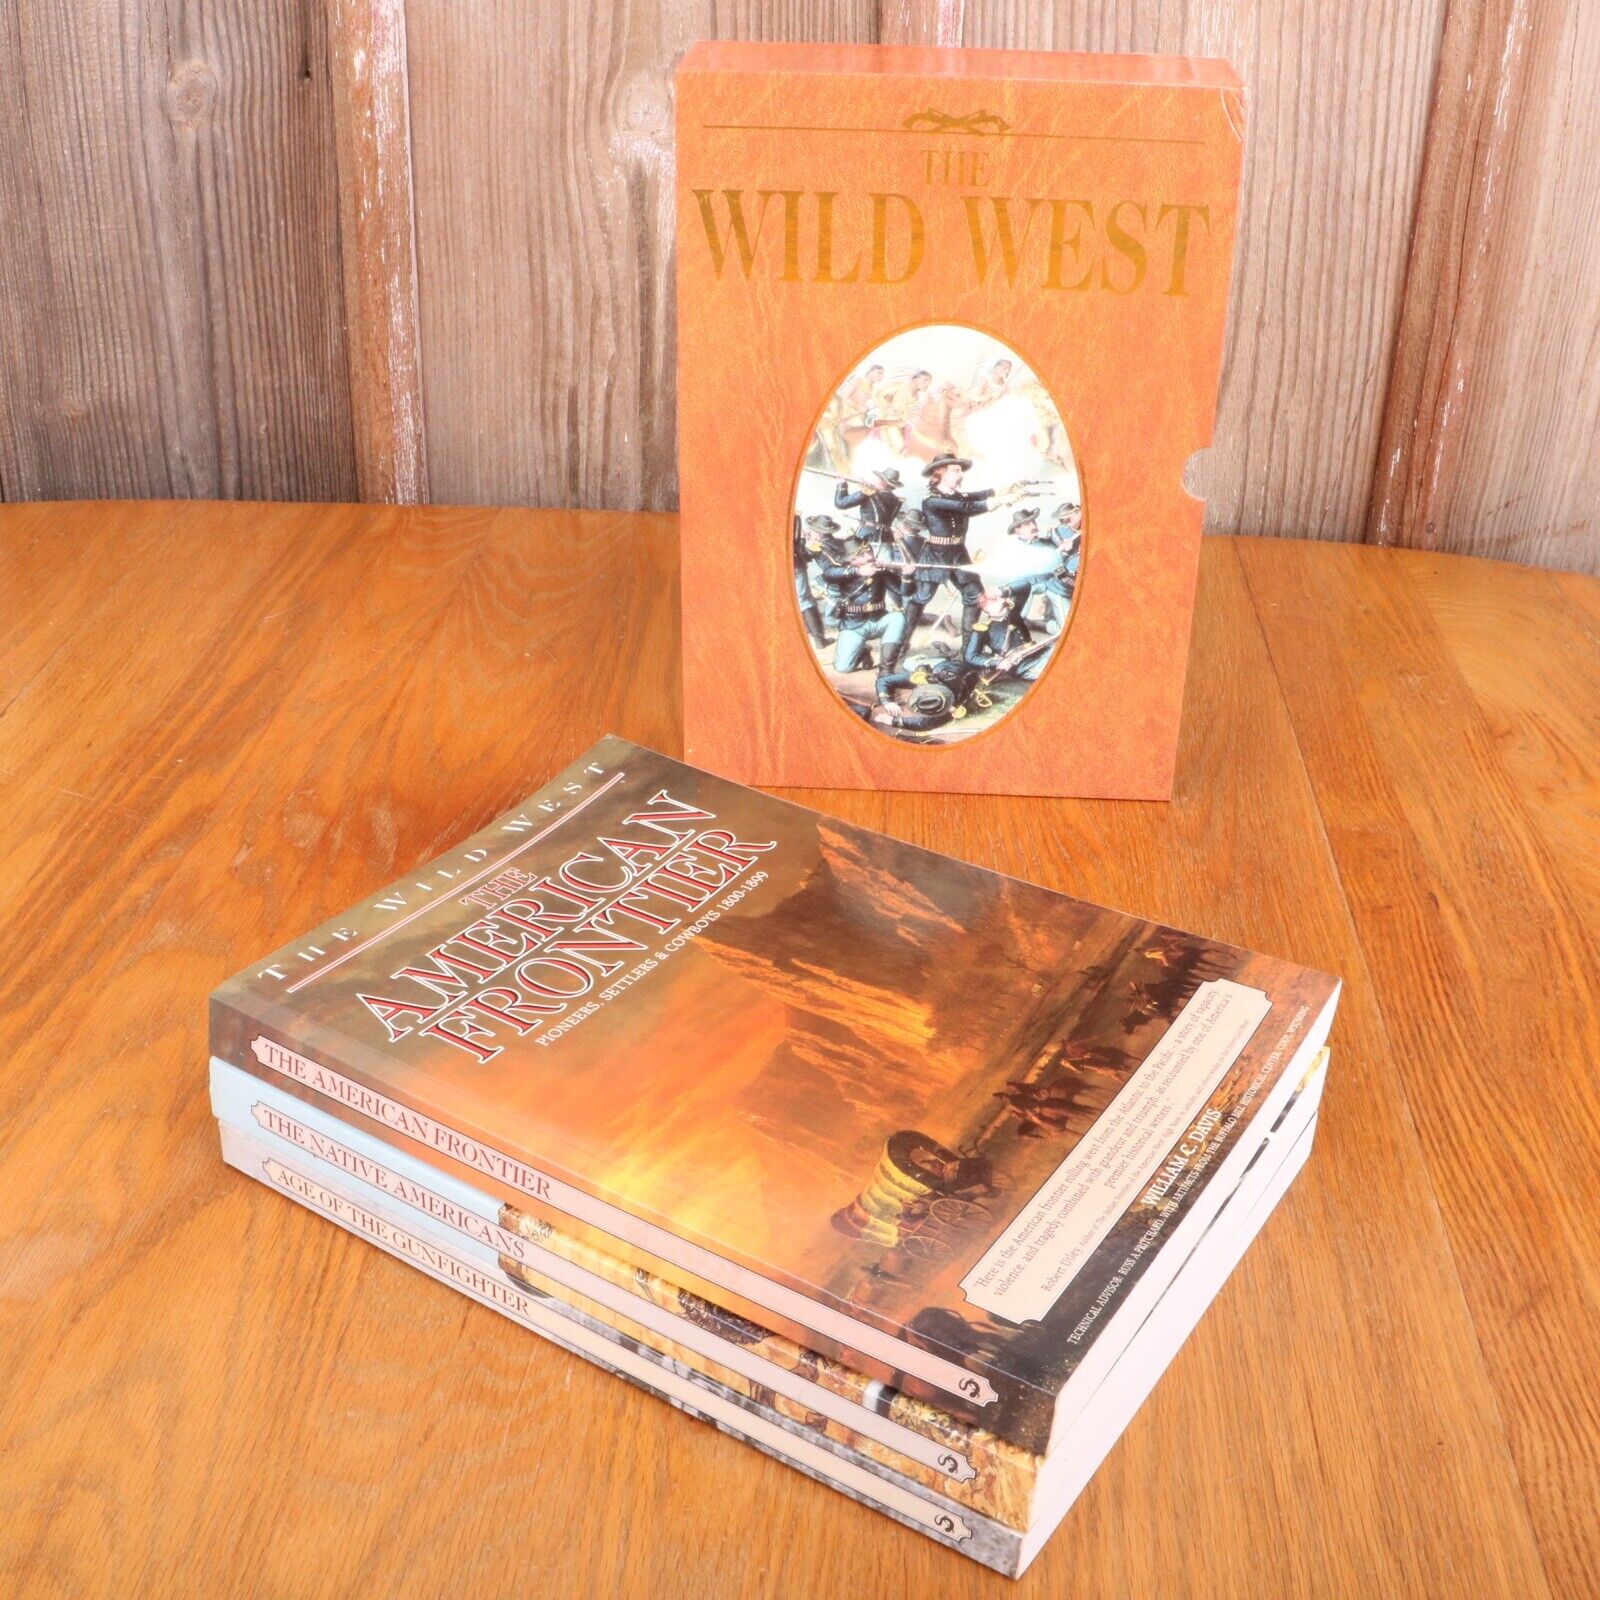 The Wild West Salamander Books 2000 3 Volumes In Slipcase